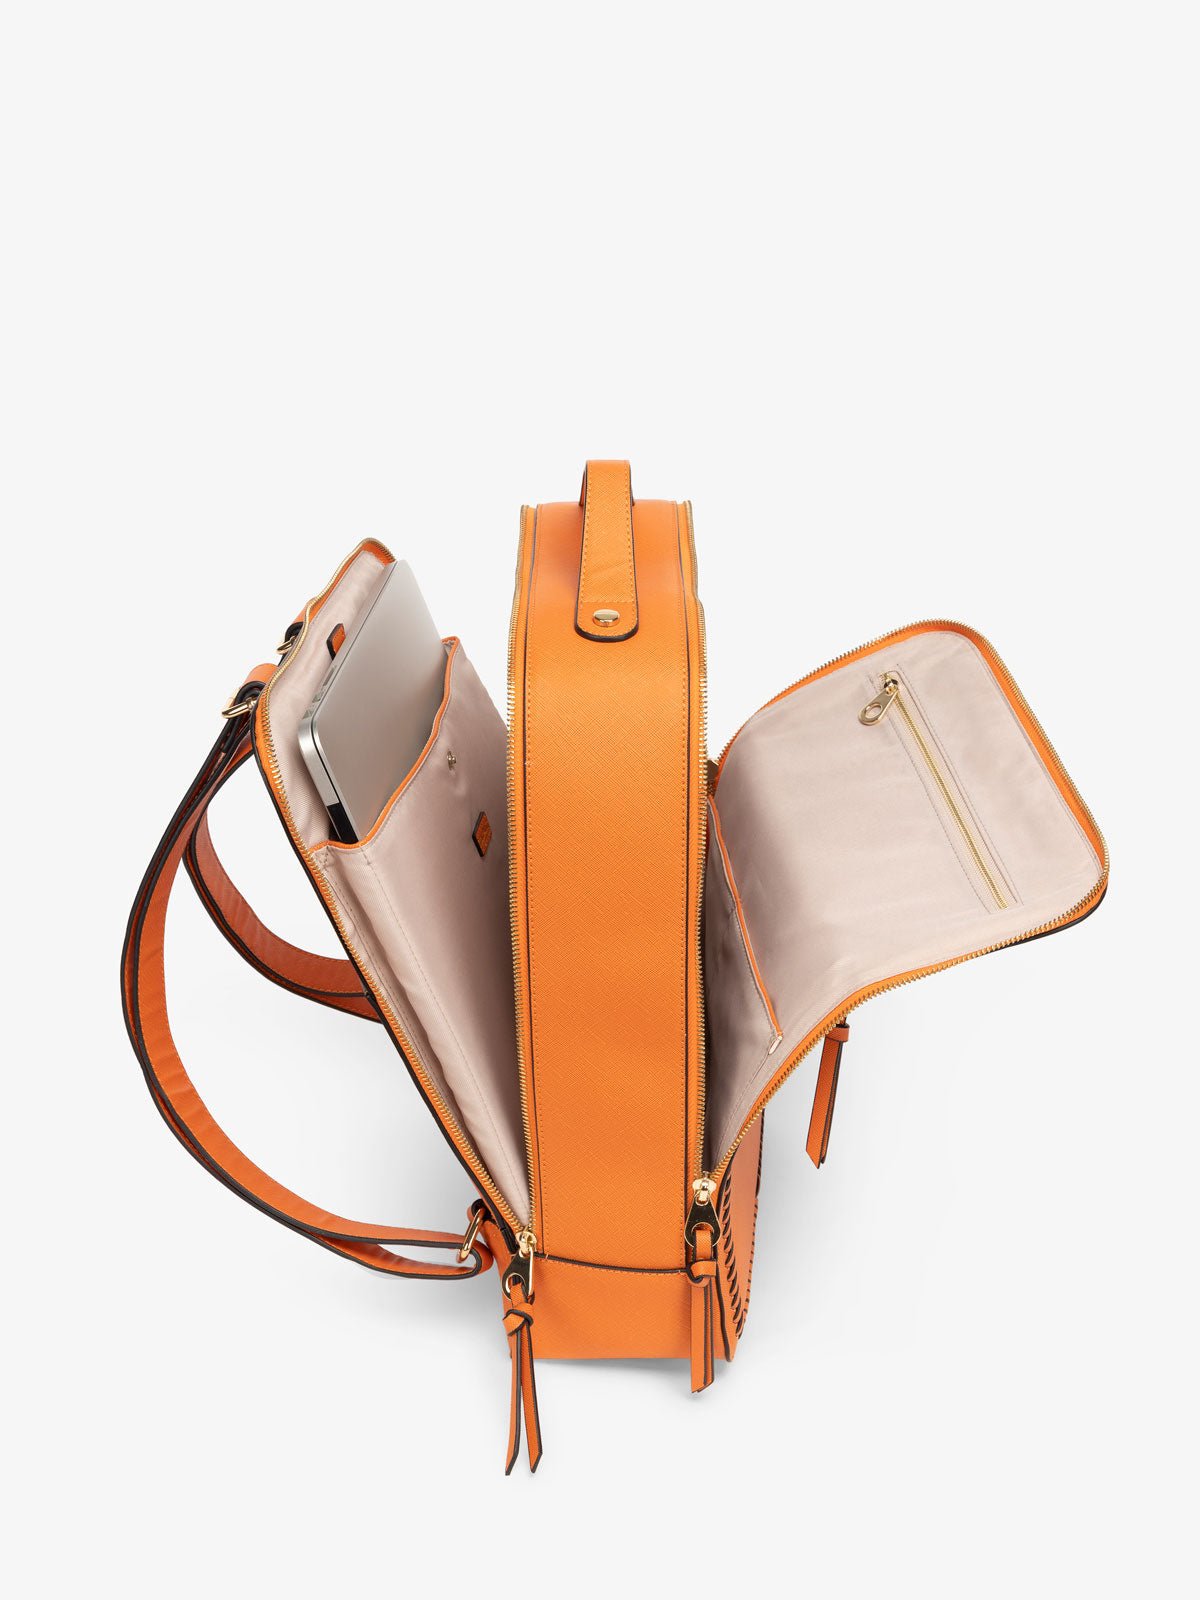 compartments for Kaya laptop backpack in orange papaya